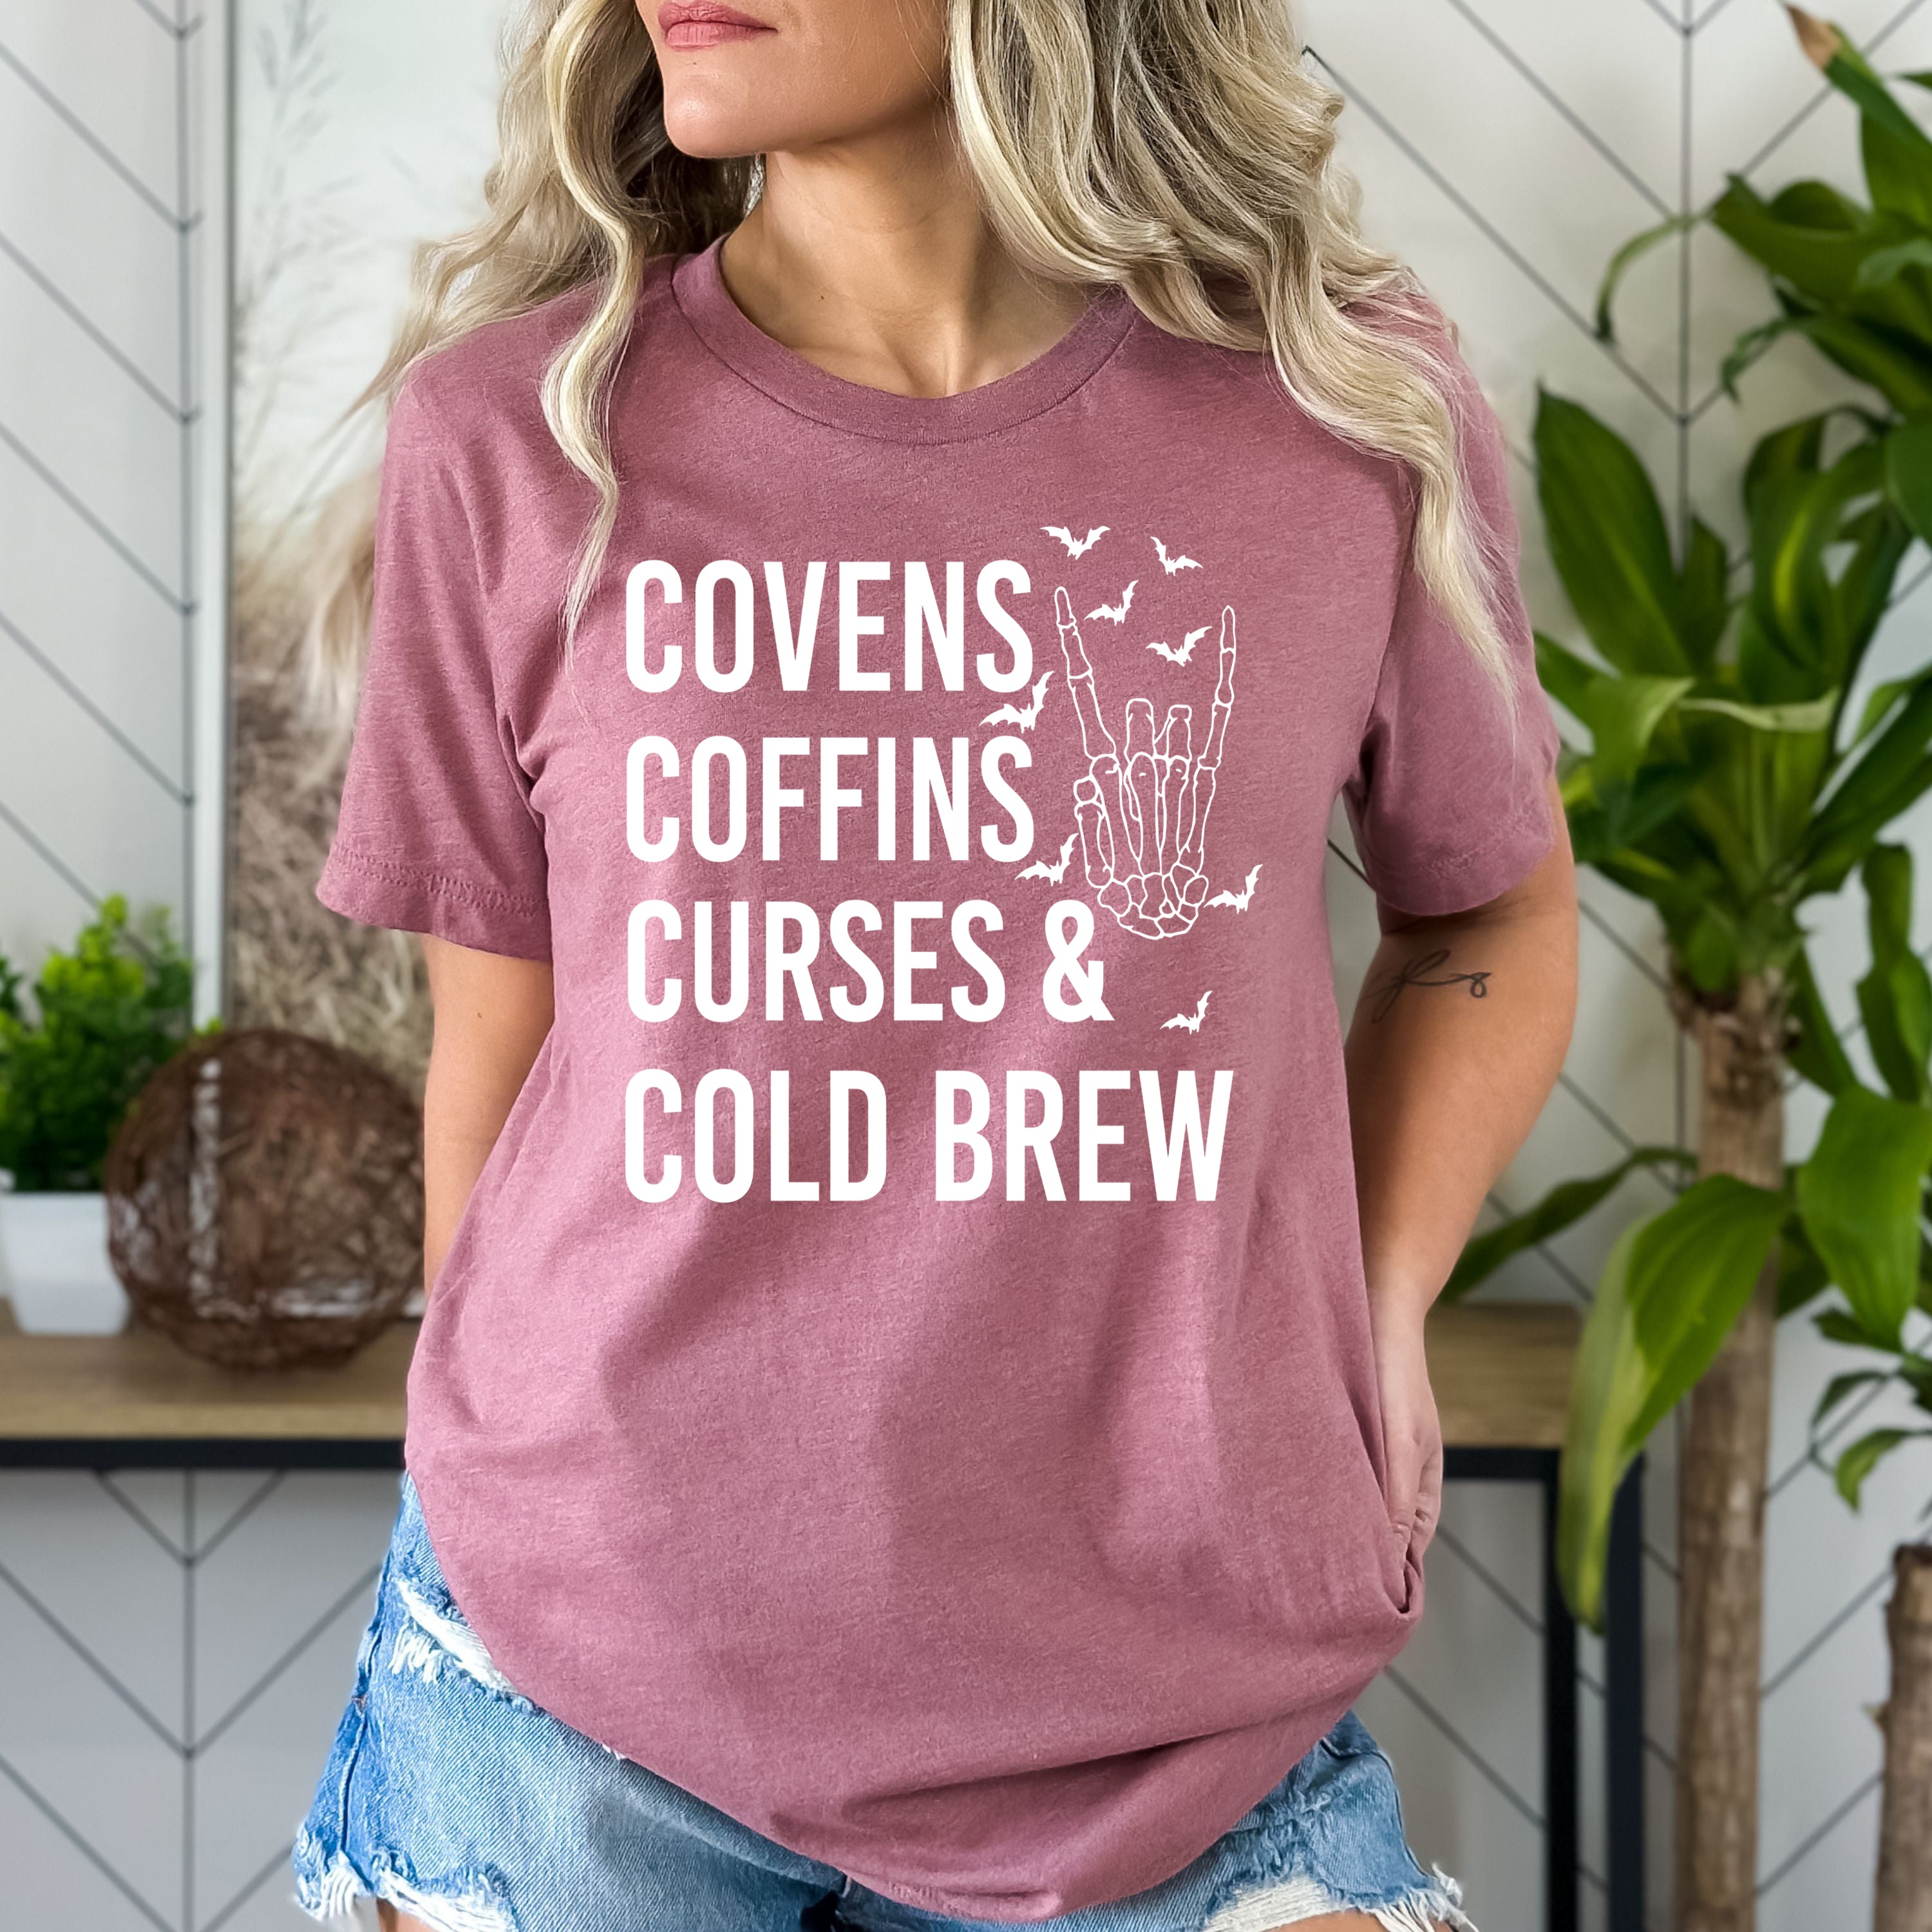 Curses & Cold Brew - Bella Canvas